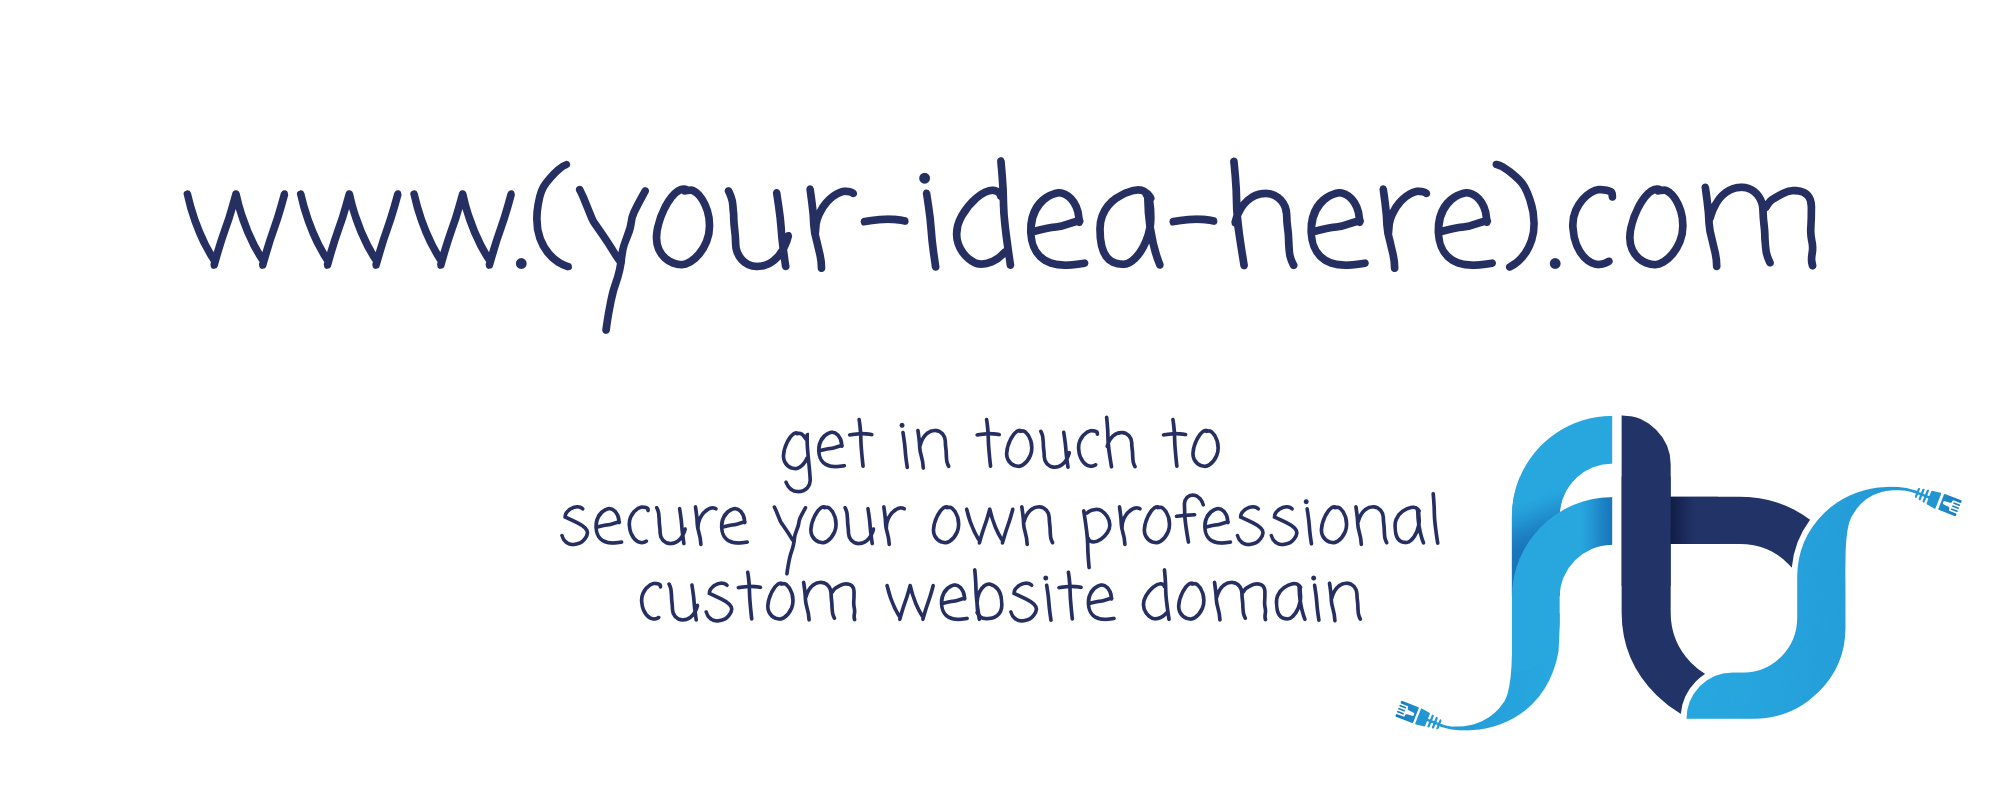 custom website domain